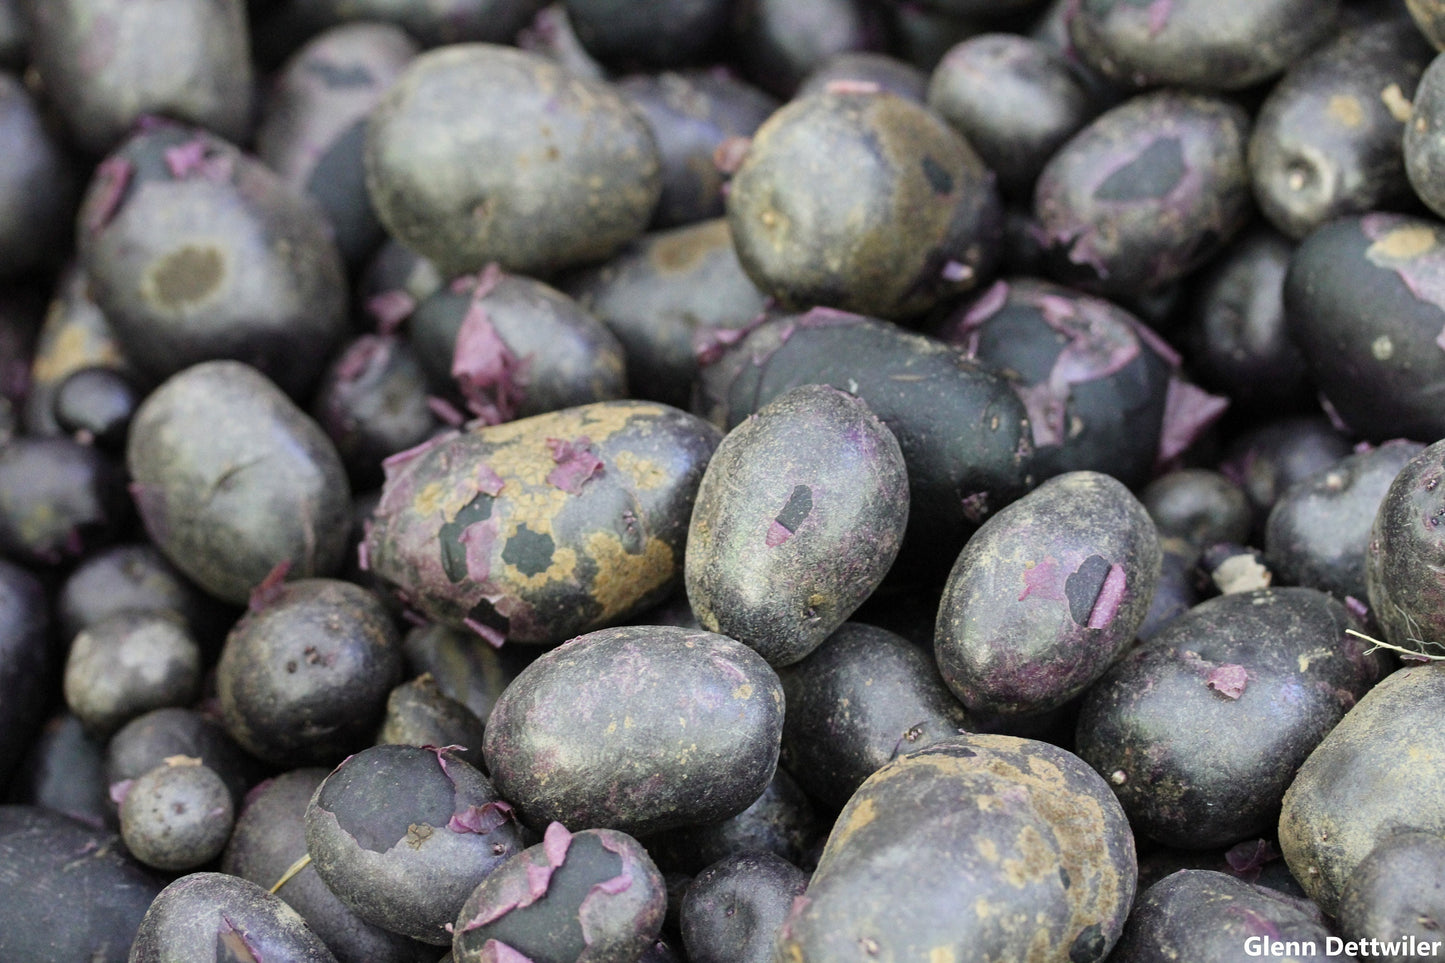 Solanum Tuberosum TPS True Blue Potato Seeds Mix - Rare - 10 True Seeds - Not Root - Grow Your Own Blue Potato - Limited